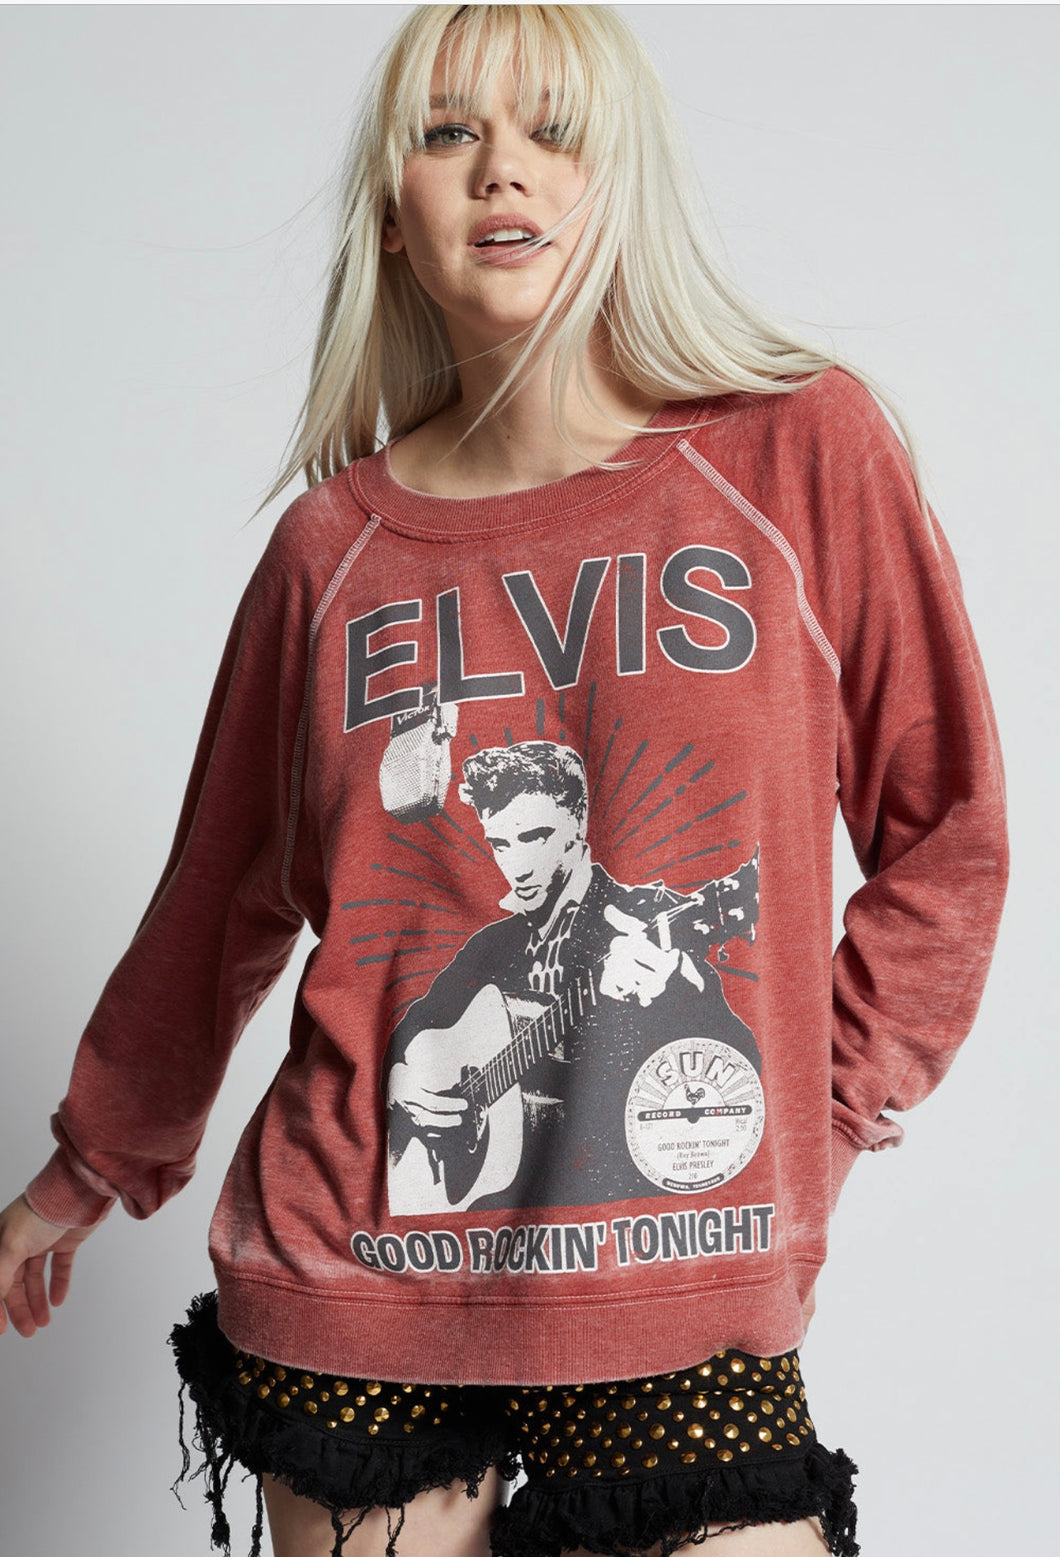 Sun Records X Elvis Presley Rockin’ Sweatshirt